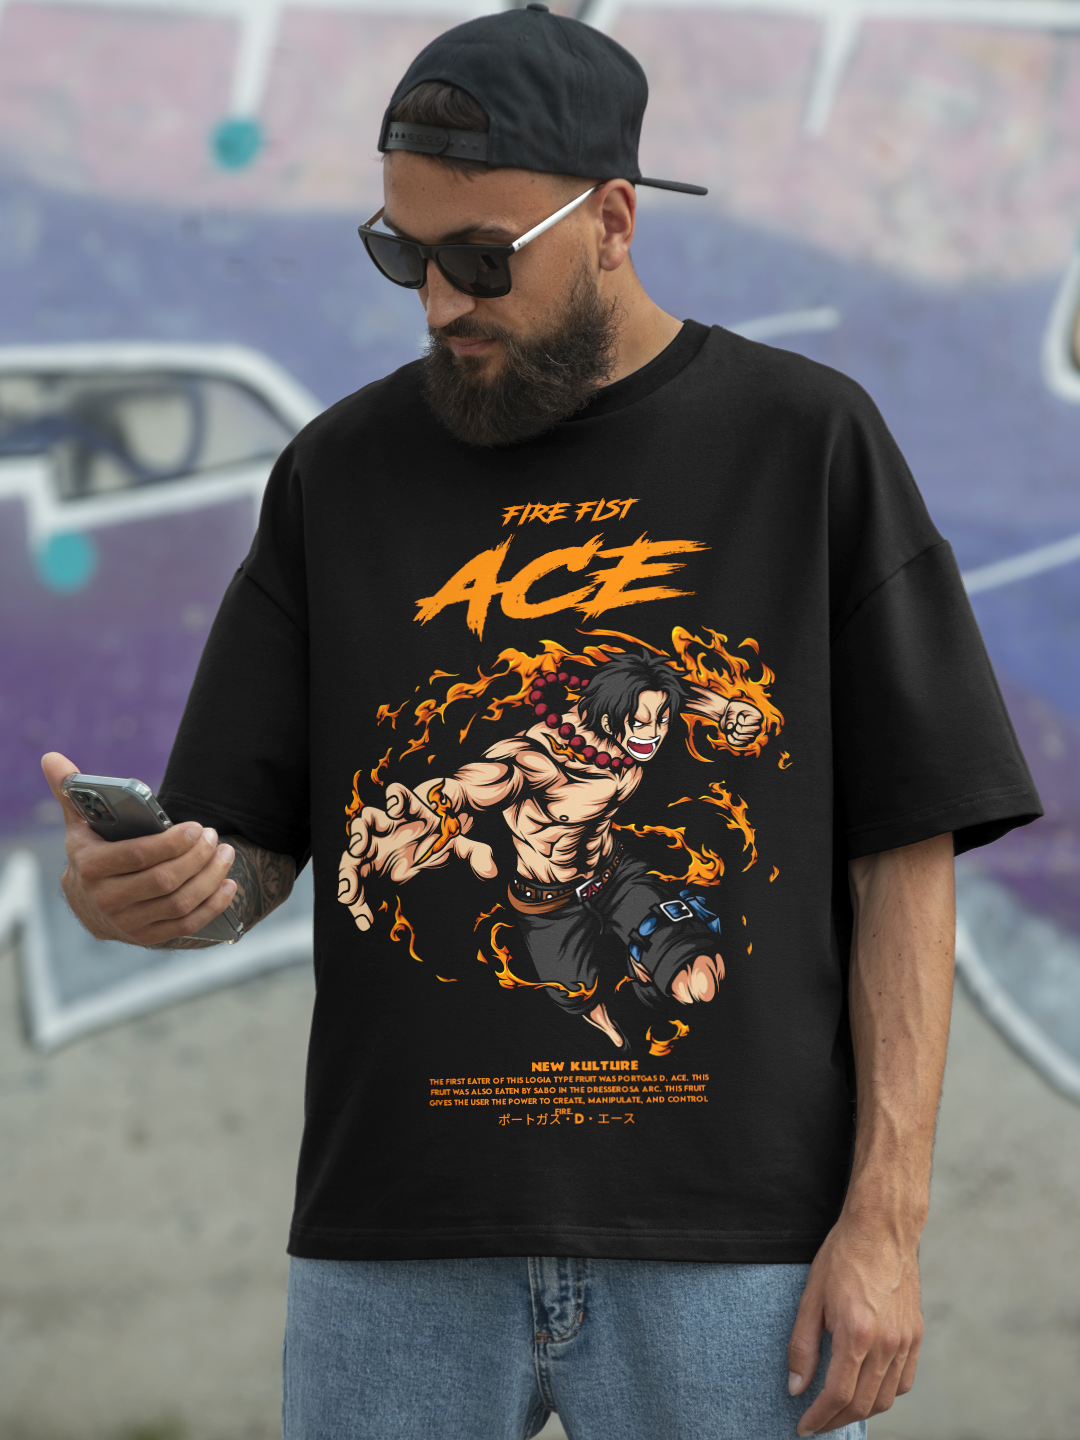 Men's Oversized T-shirt with Fire Fist ACE Design – Black Color Option